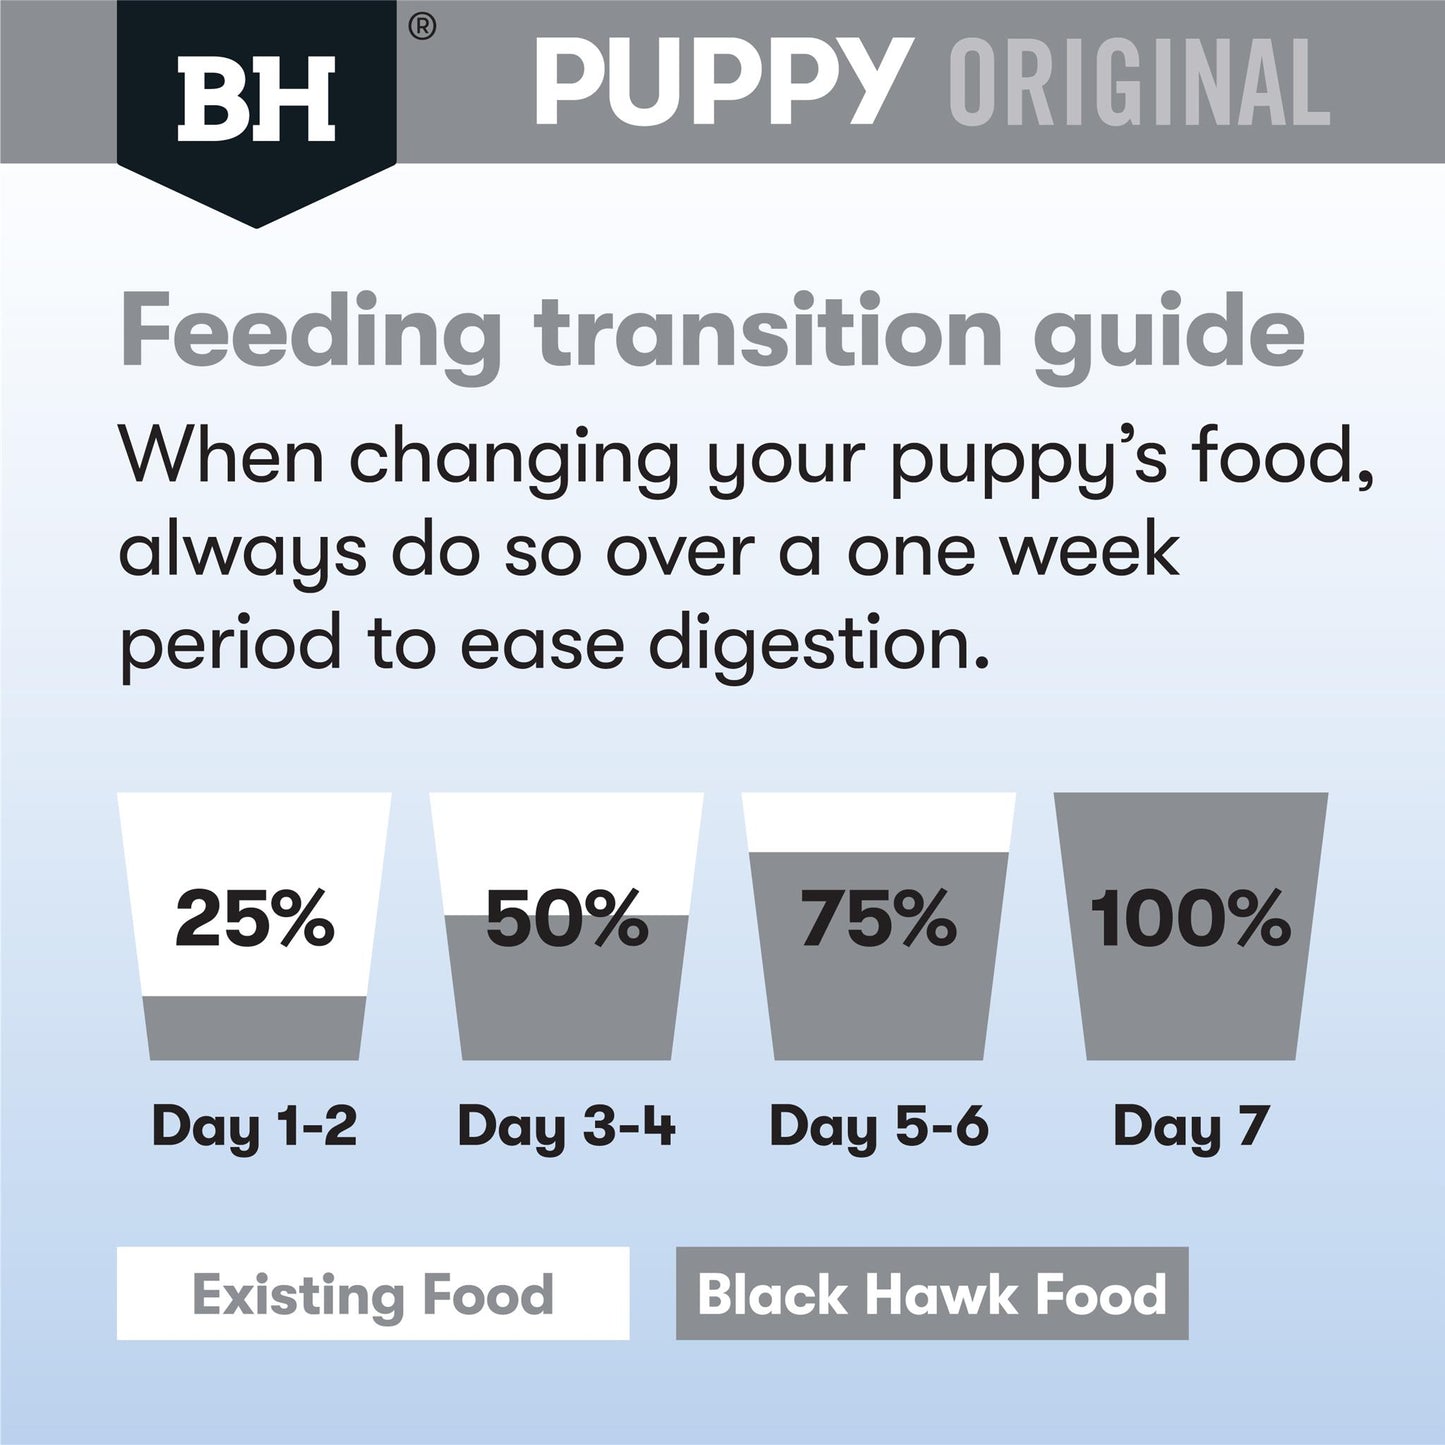 BlackHawk: Puppy Large Breed Lamb & Rice